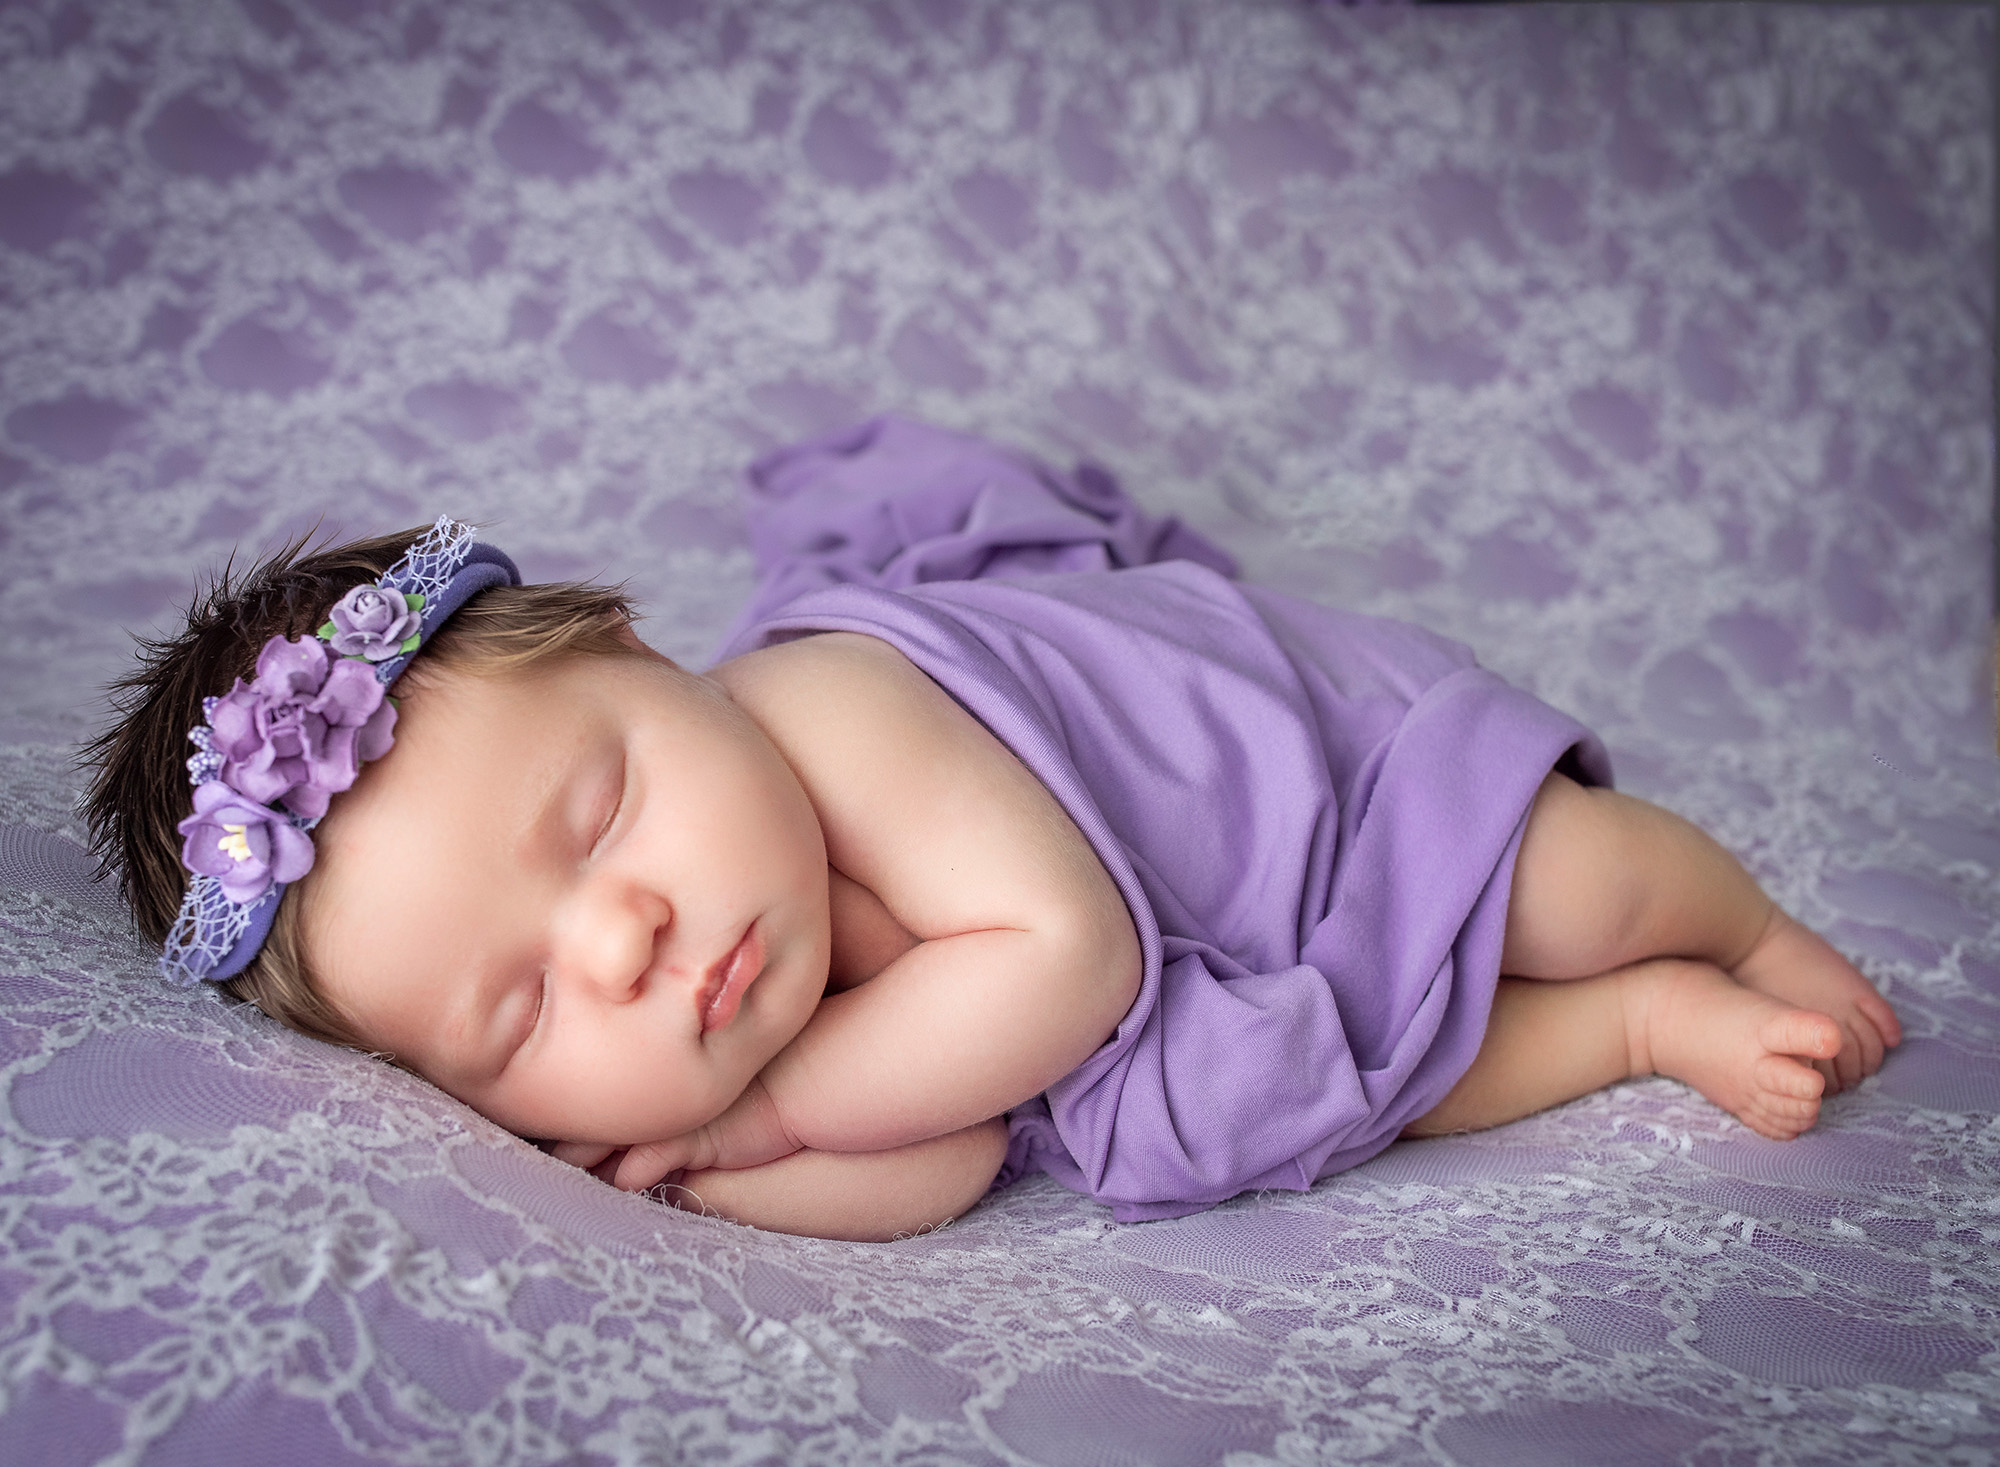 newborn baby girl asleep on laced purple blanket wearing purple headband